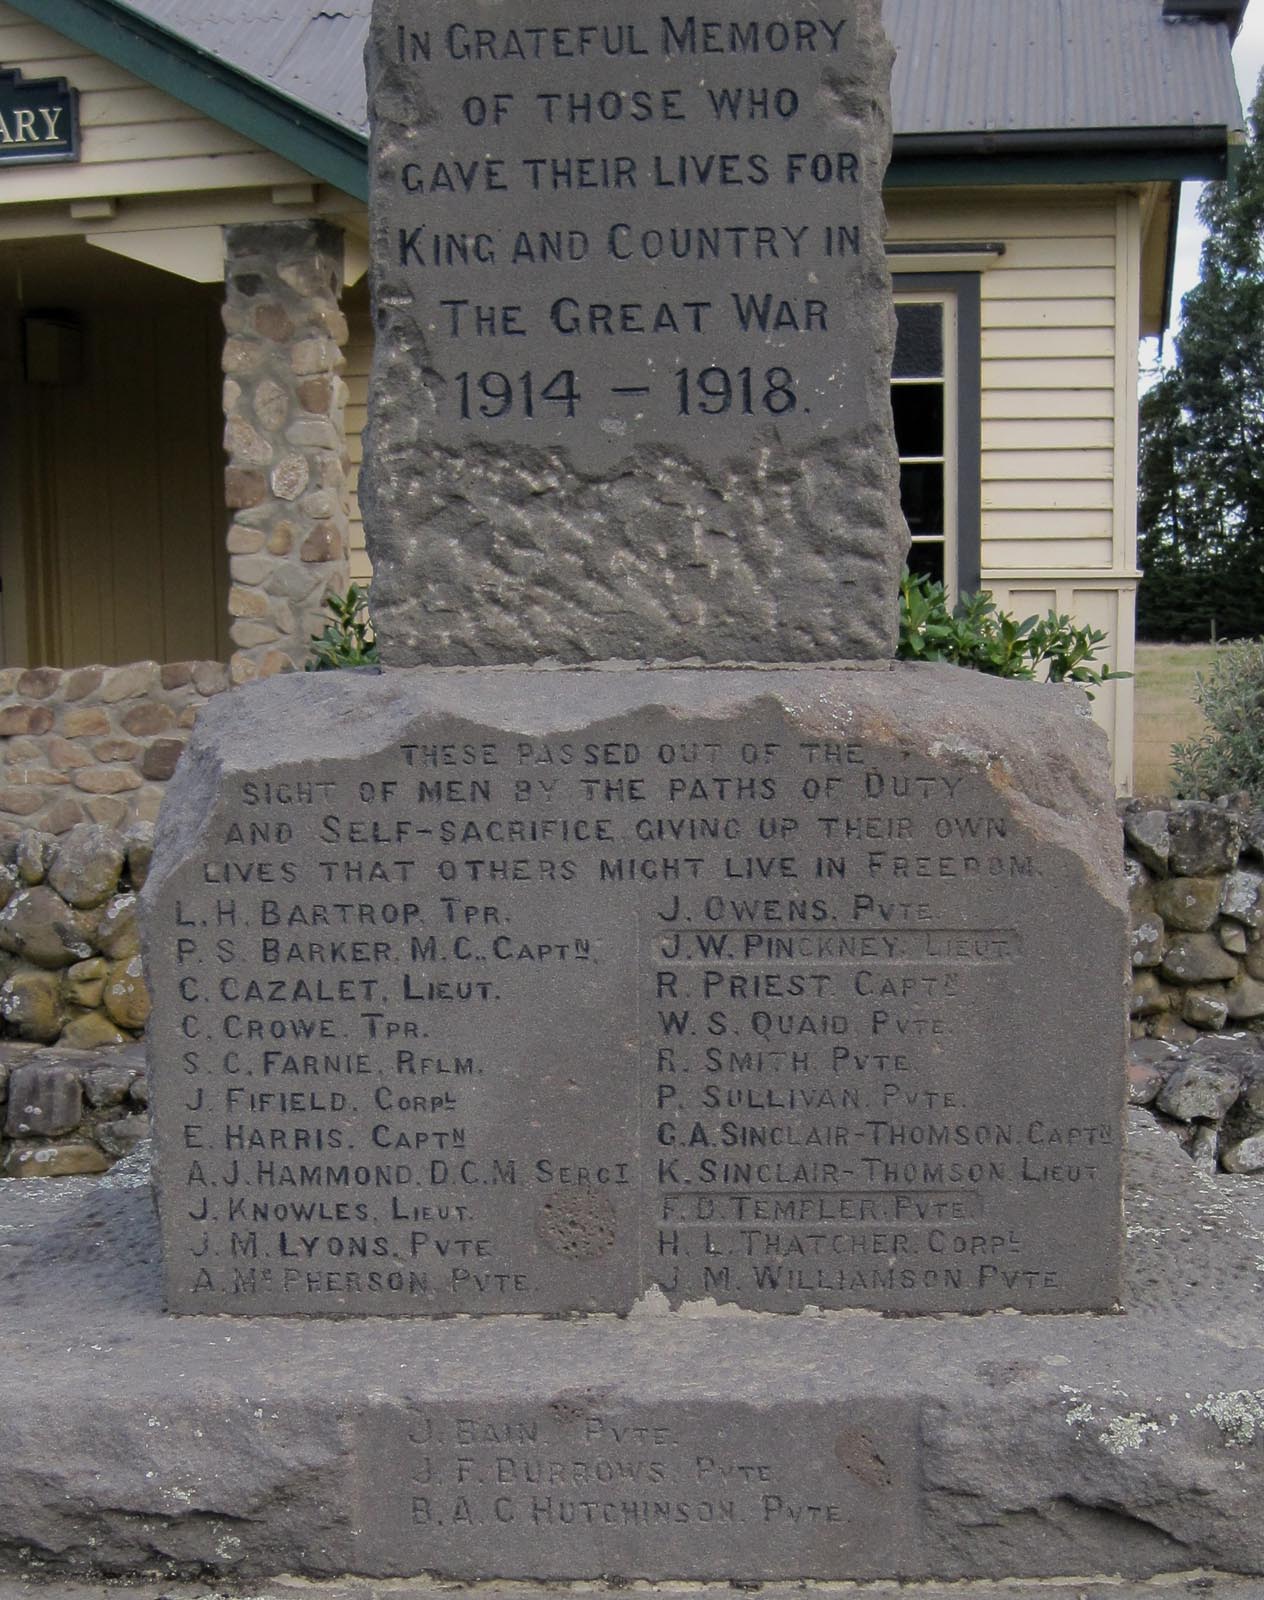 Woodbury War Memorial (World War One plaque), pictured in 2010